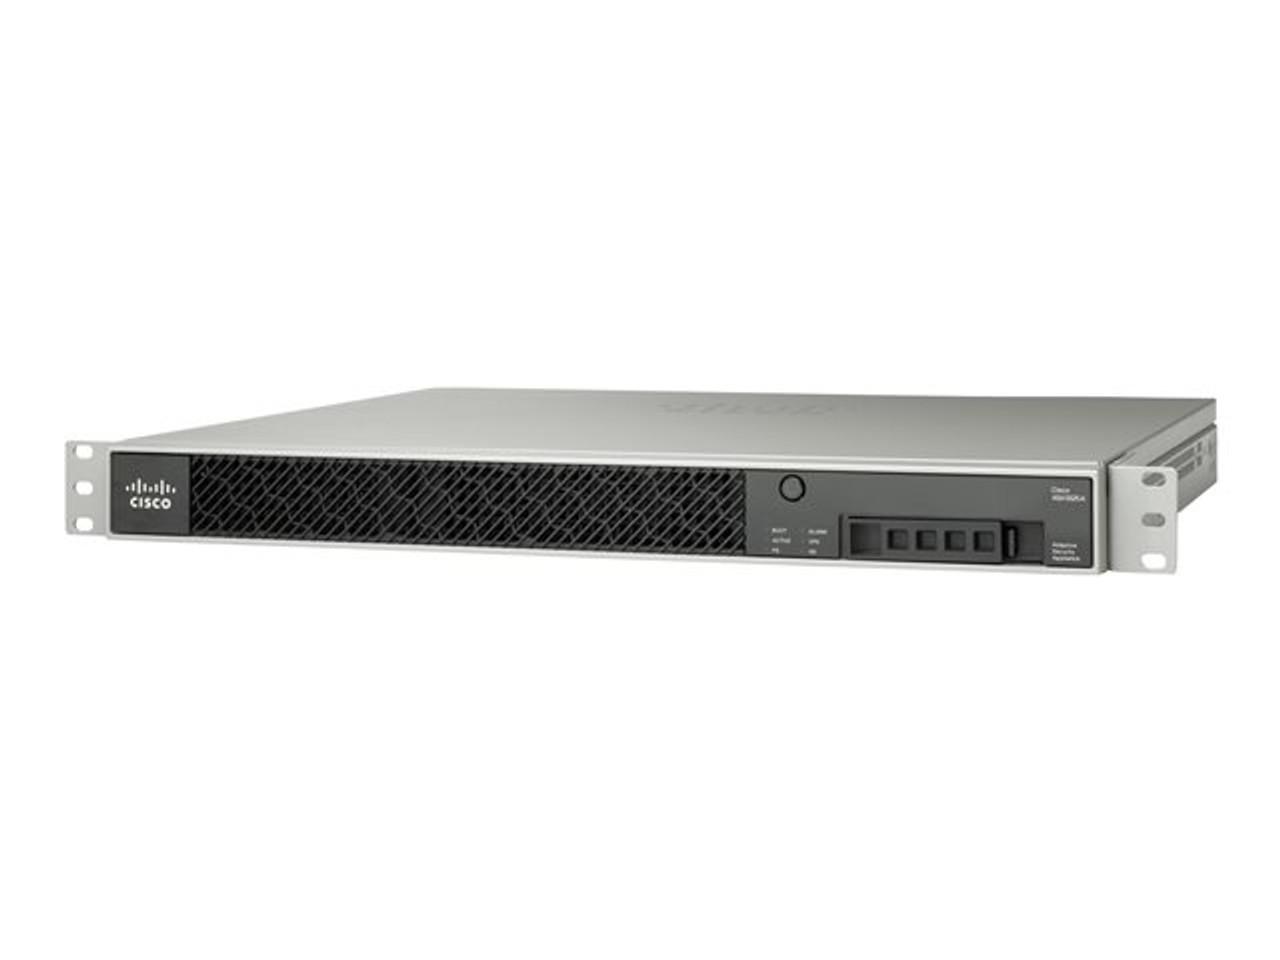 ASA5525-IPS-K9 Cisco ASA 5500 Series IPS Edition Bundles